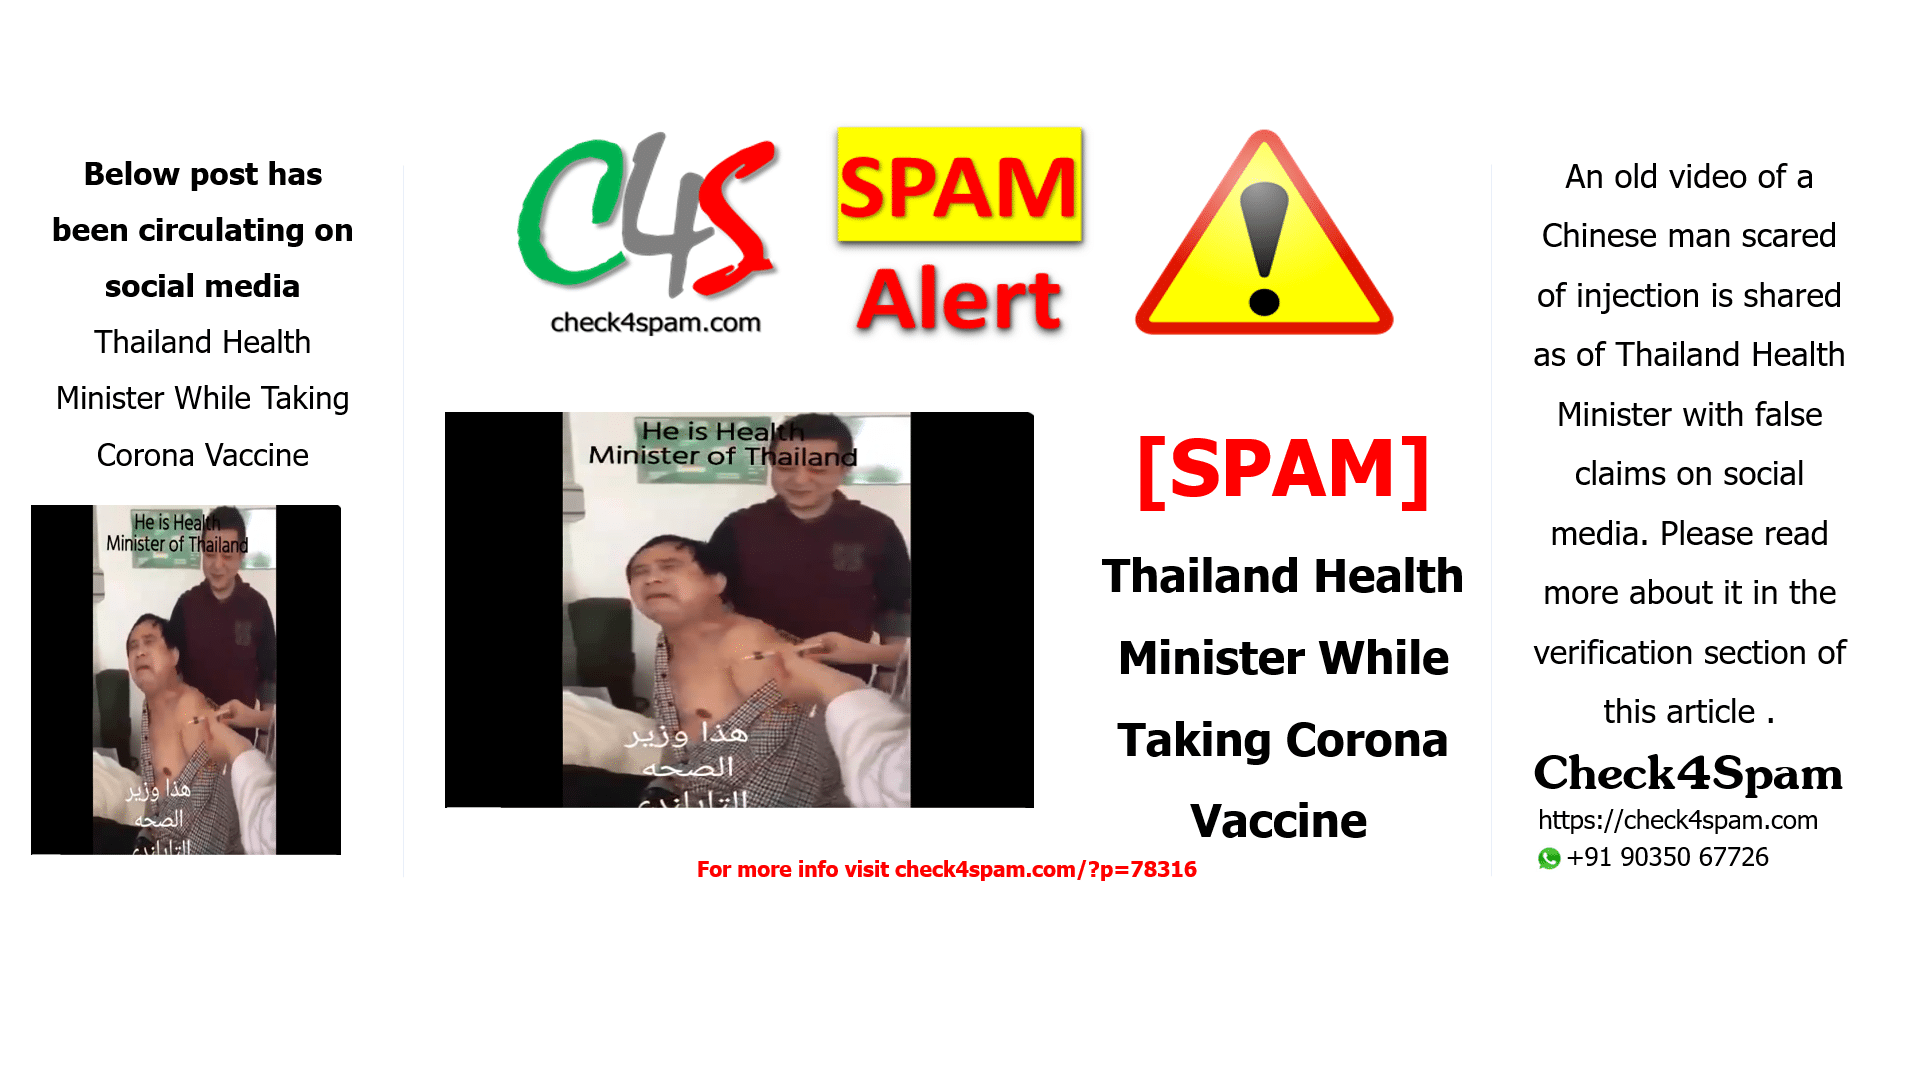 Thailand Health Minister While Taking Corona Vaccine